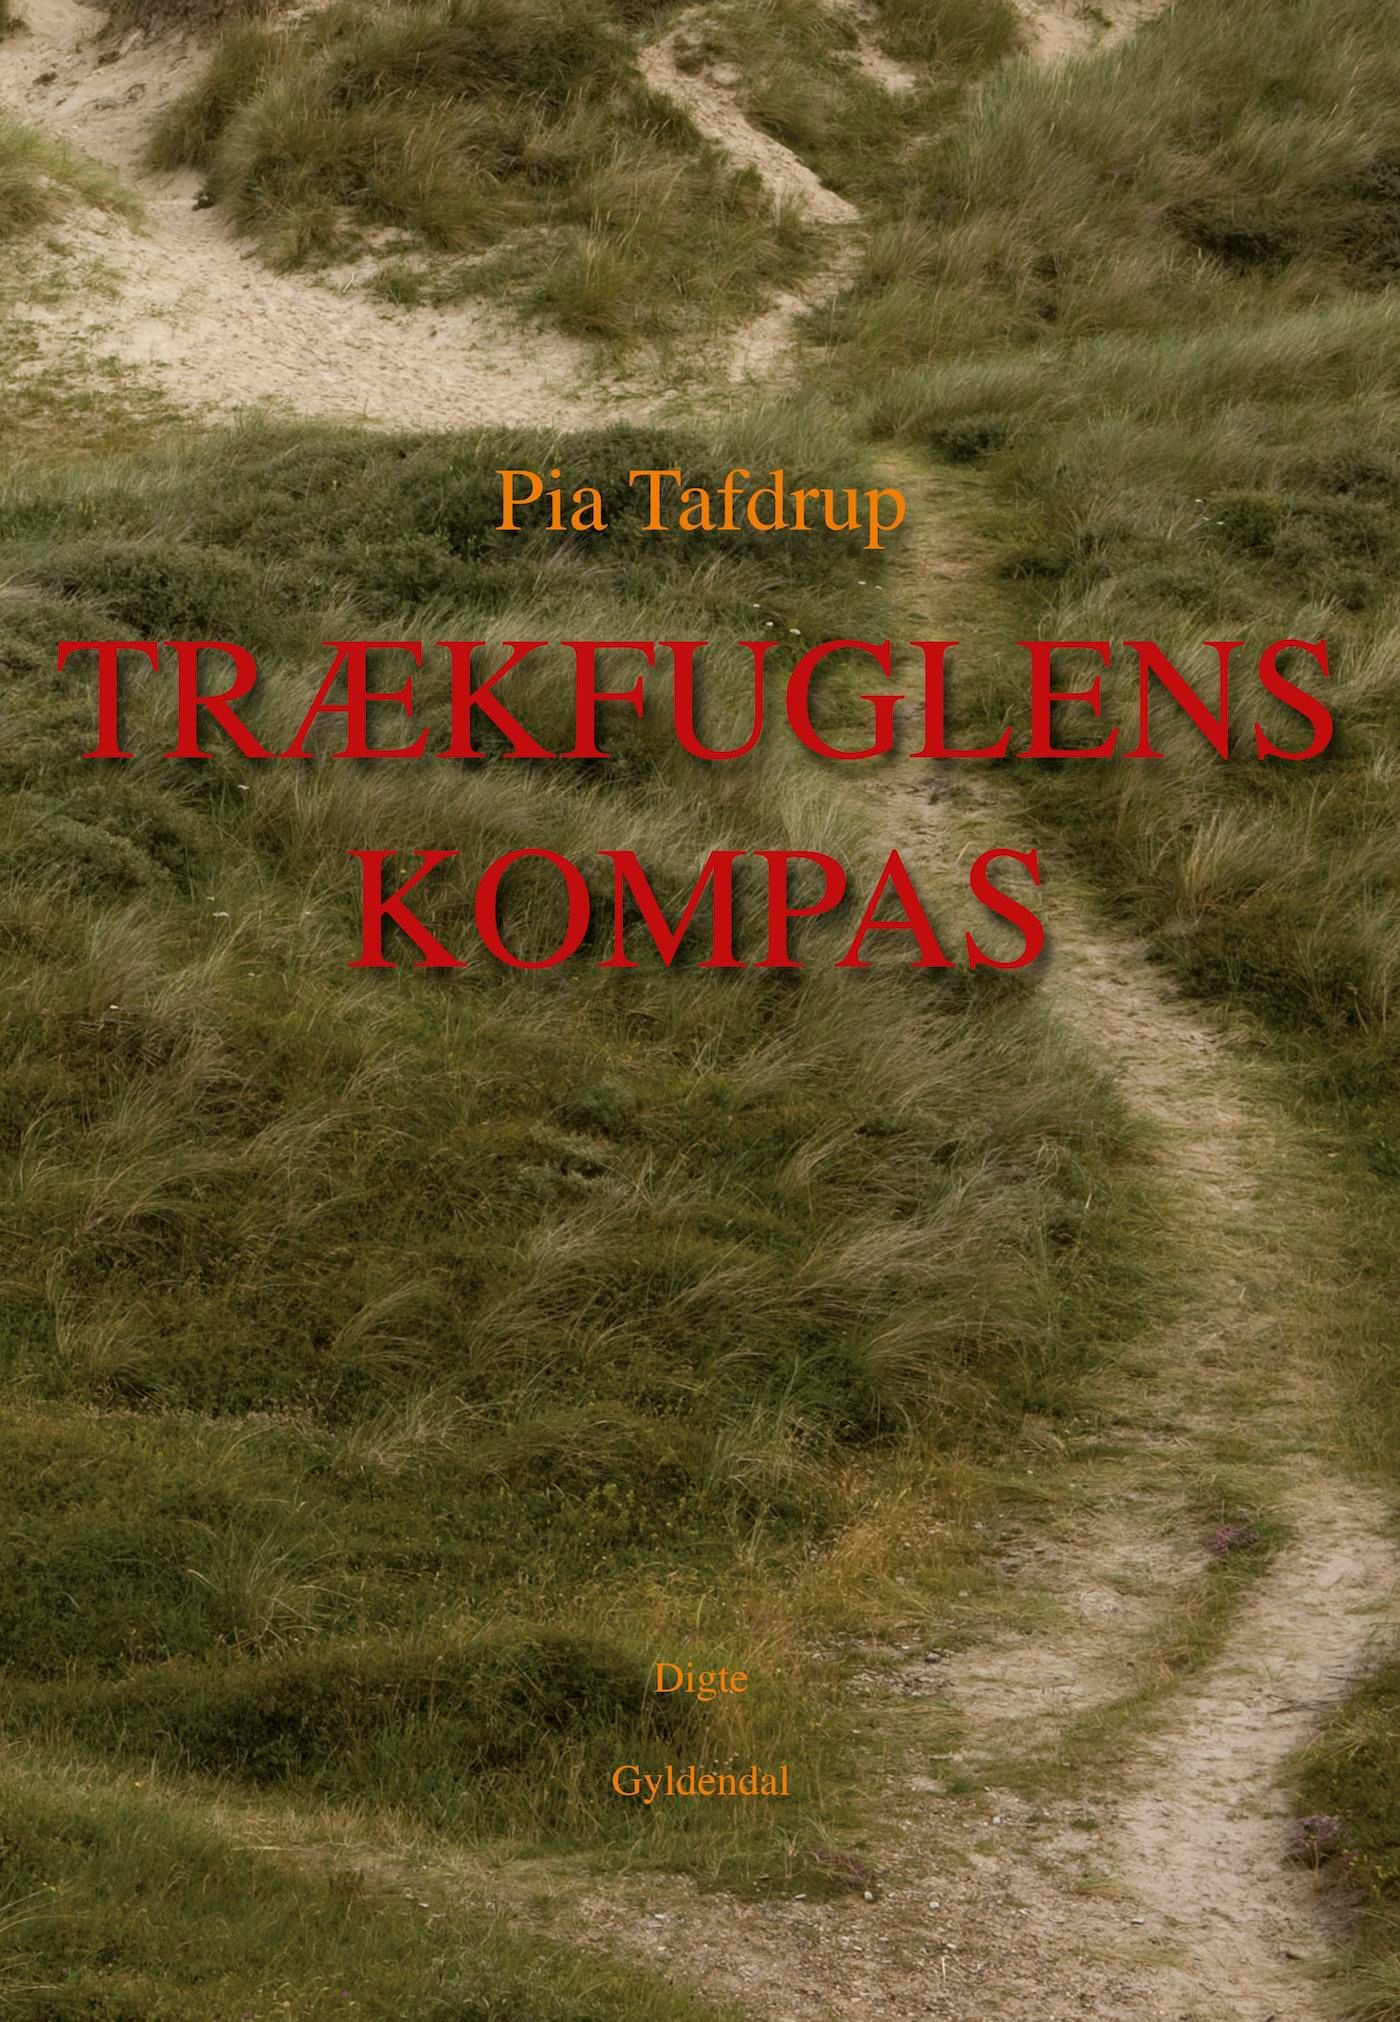 Trækfuglens kompas, e-bog af Pia Tafdrup